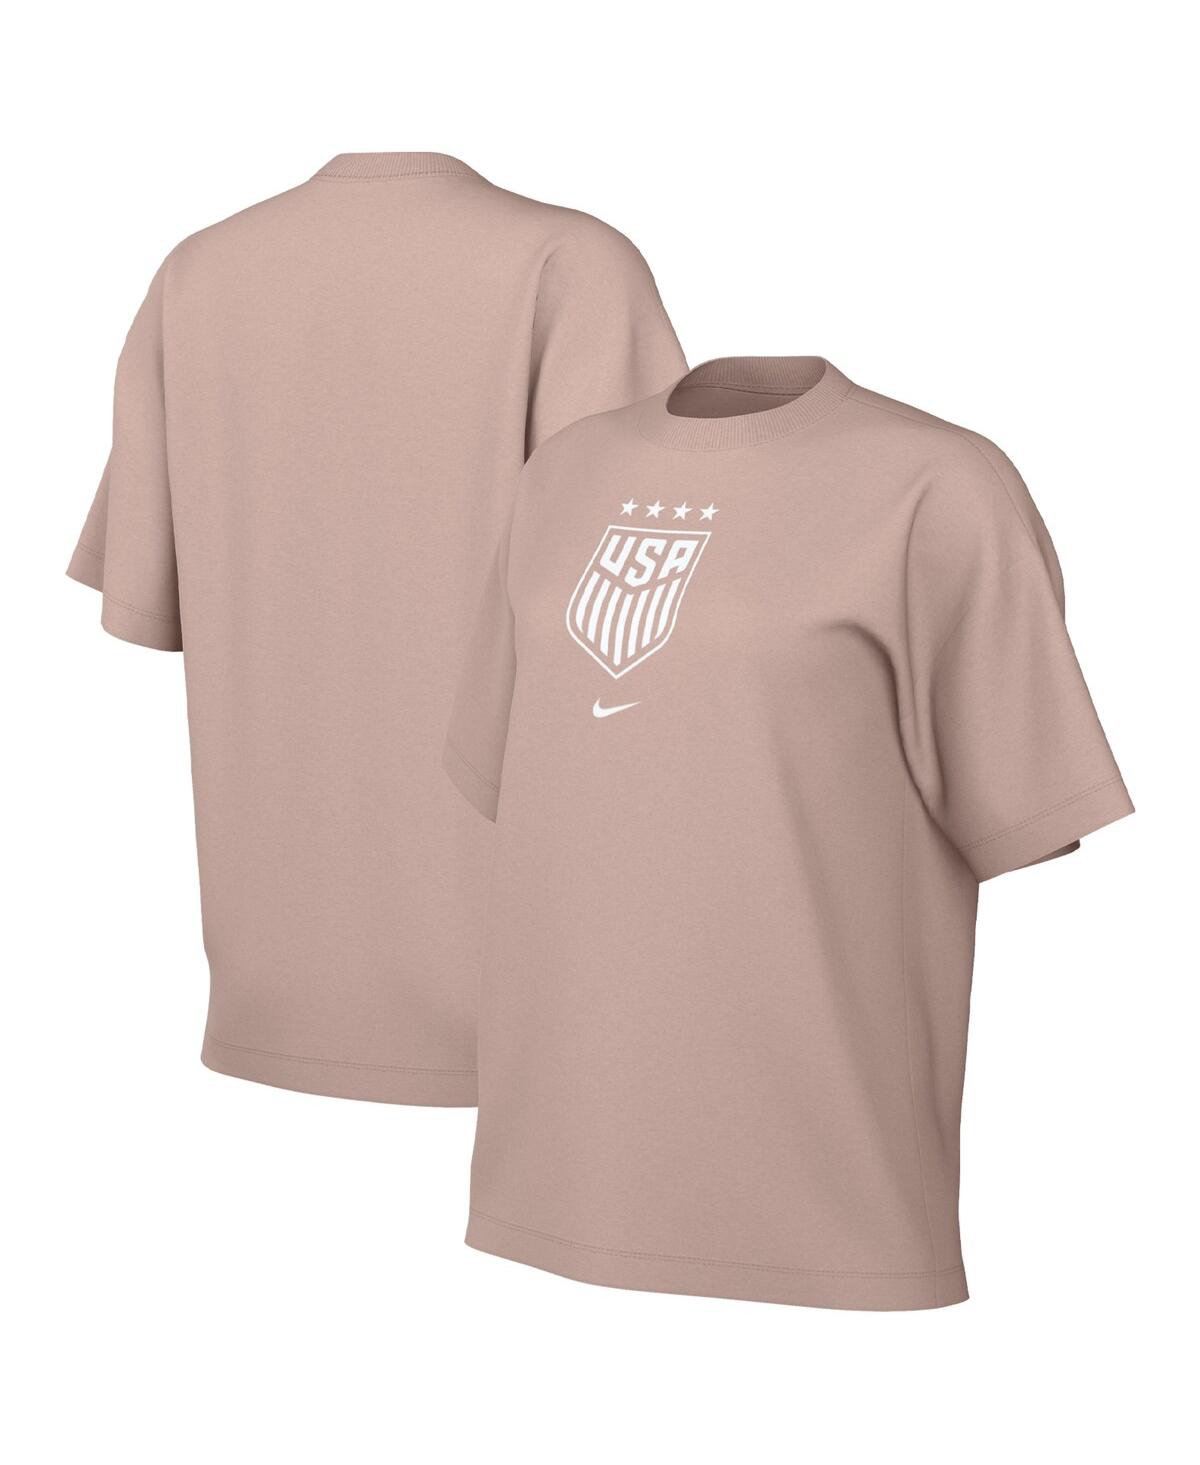 Women's Nike Tan Uswnt Crest T-shirt - Tan